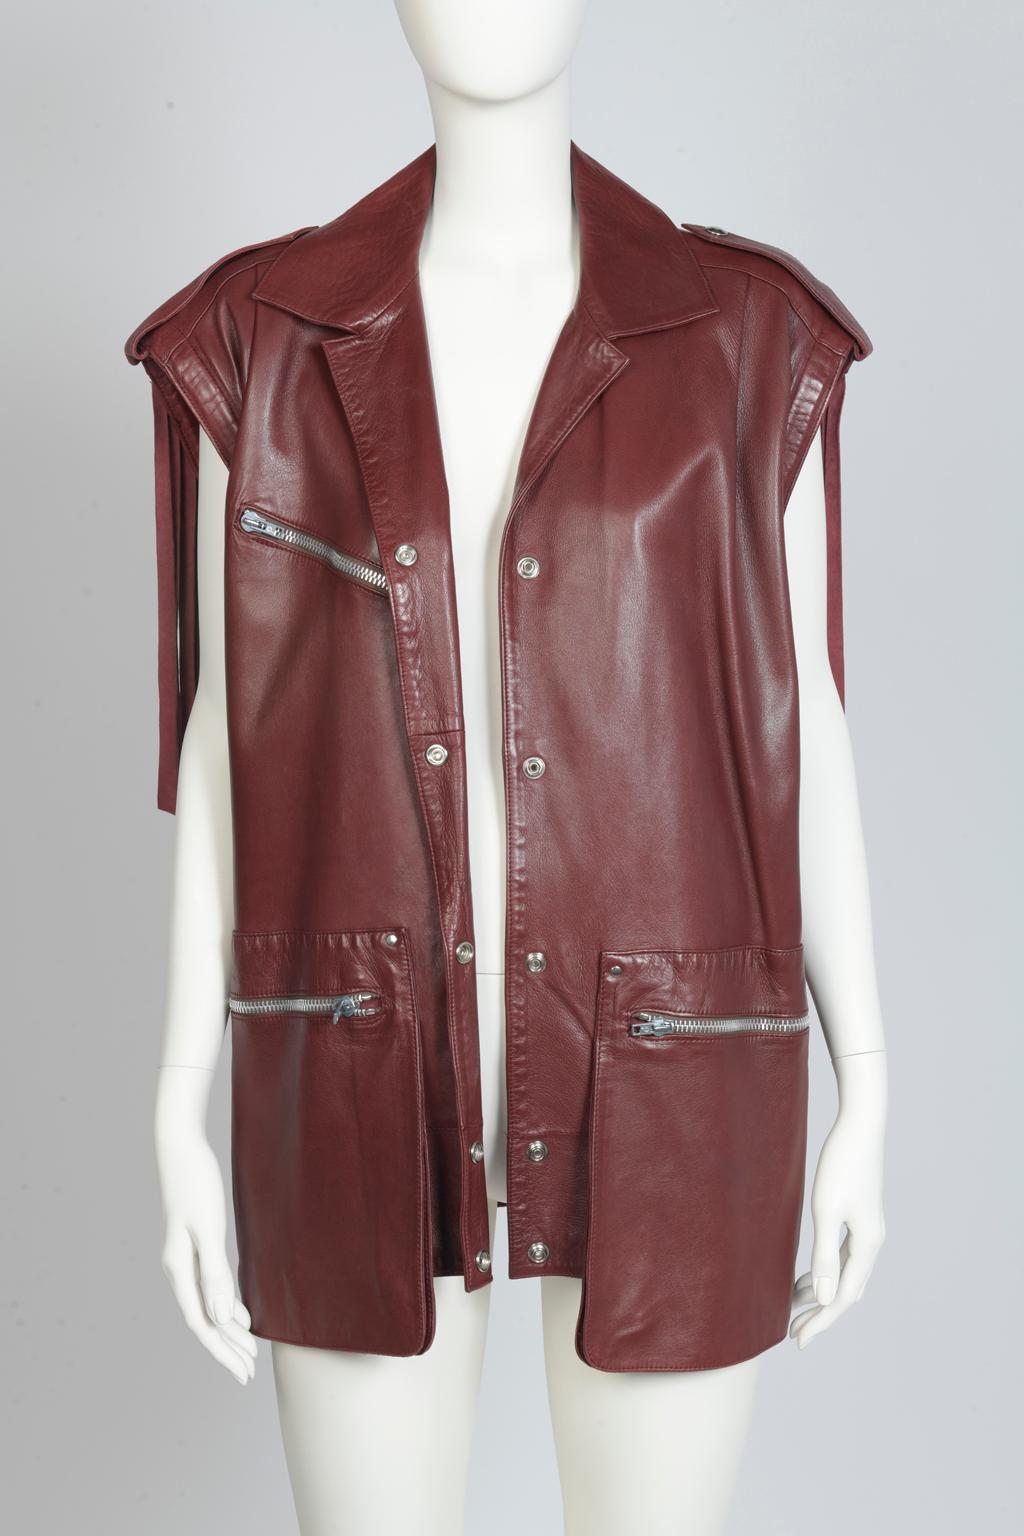 claude montana leather jacket